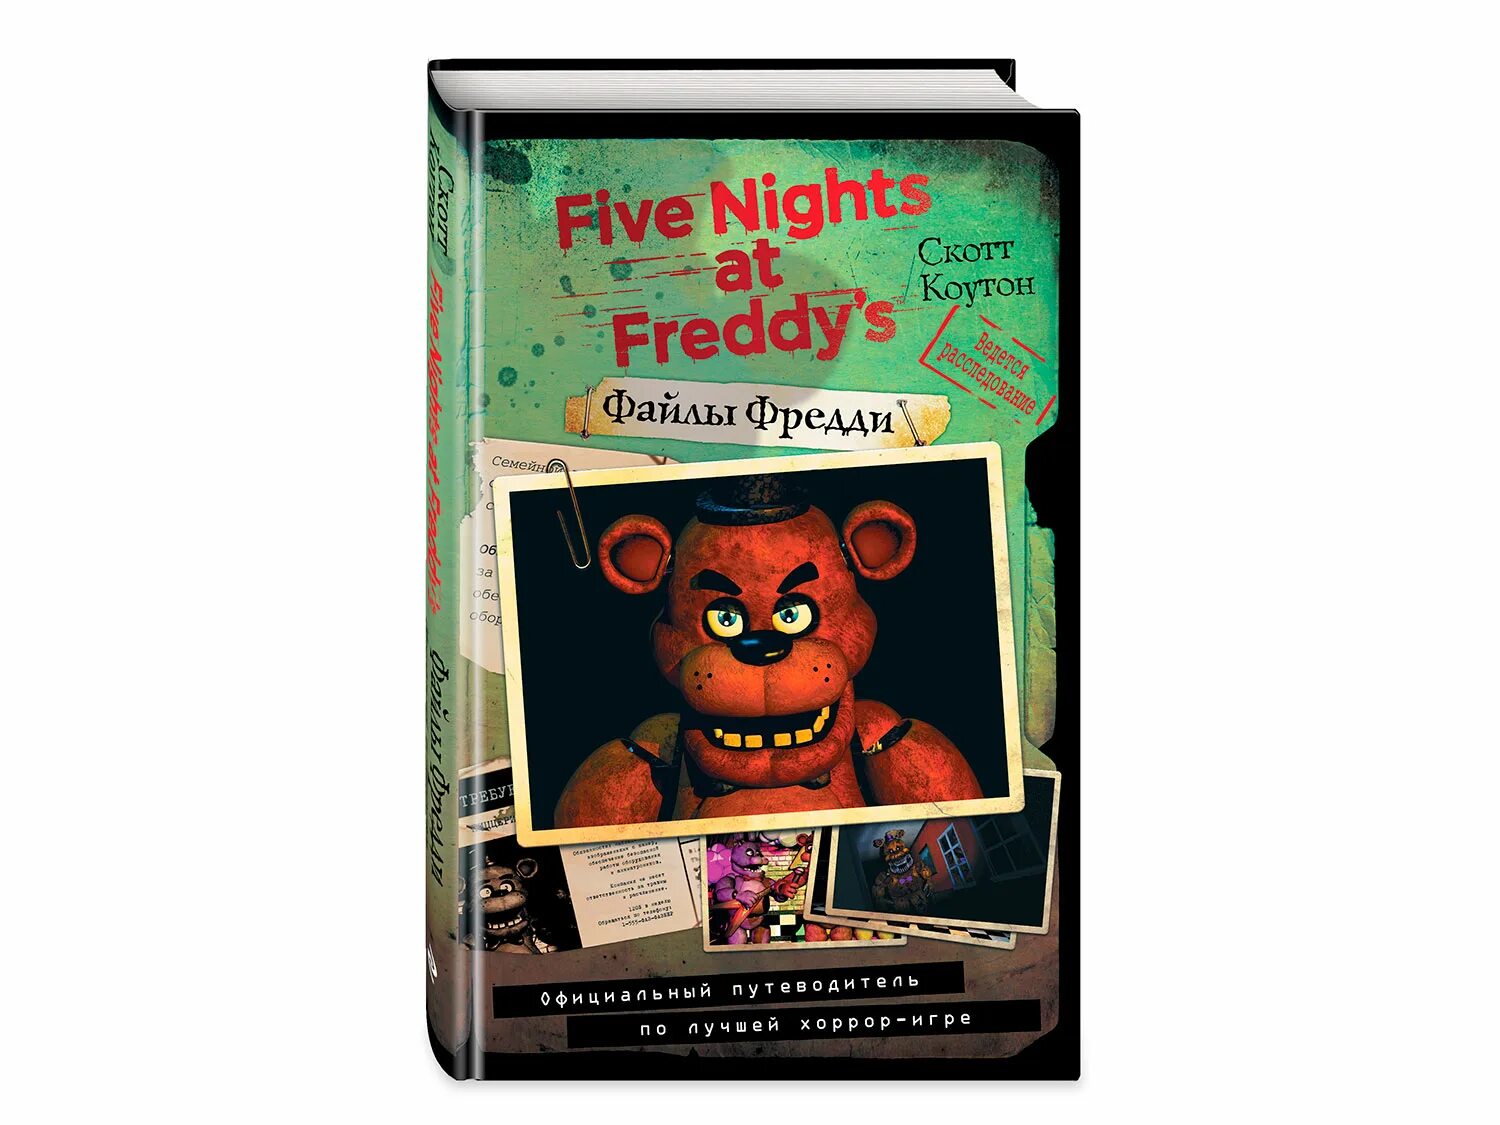 Файлы Фредди. Five Nights at Freddy's файлы Фредди. Книга Фредди. Книга Five Nights at Freddy's файлы Фредди.